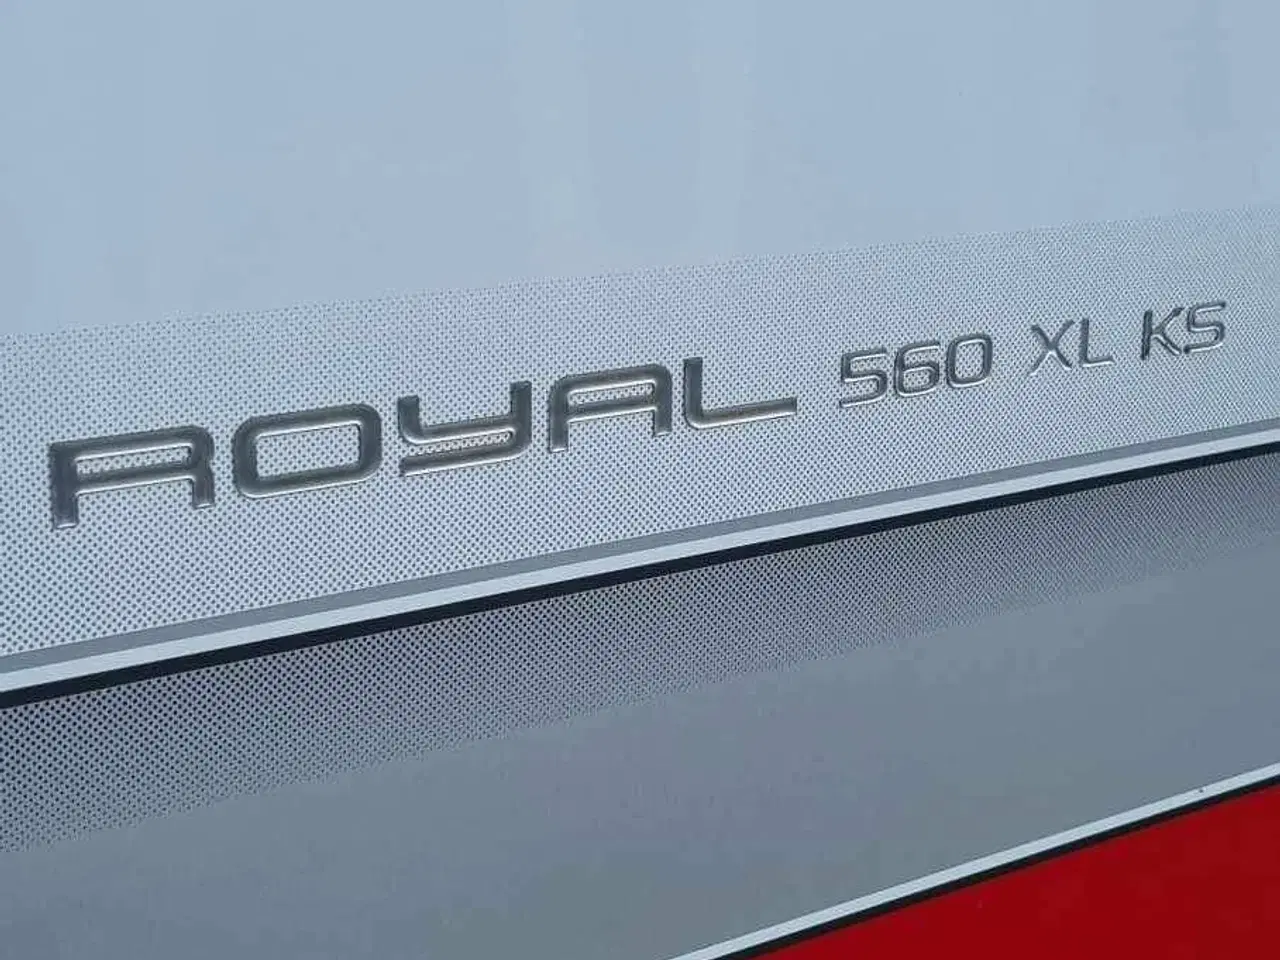 Billede 10 - Kabe Royal 560 XL KS